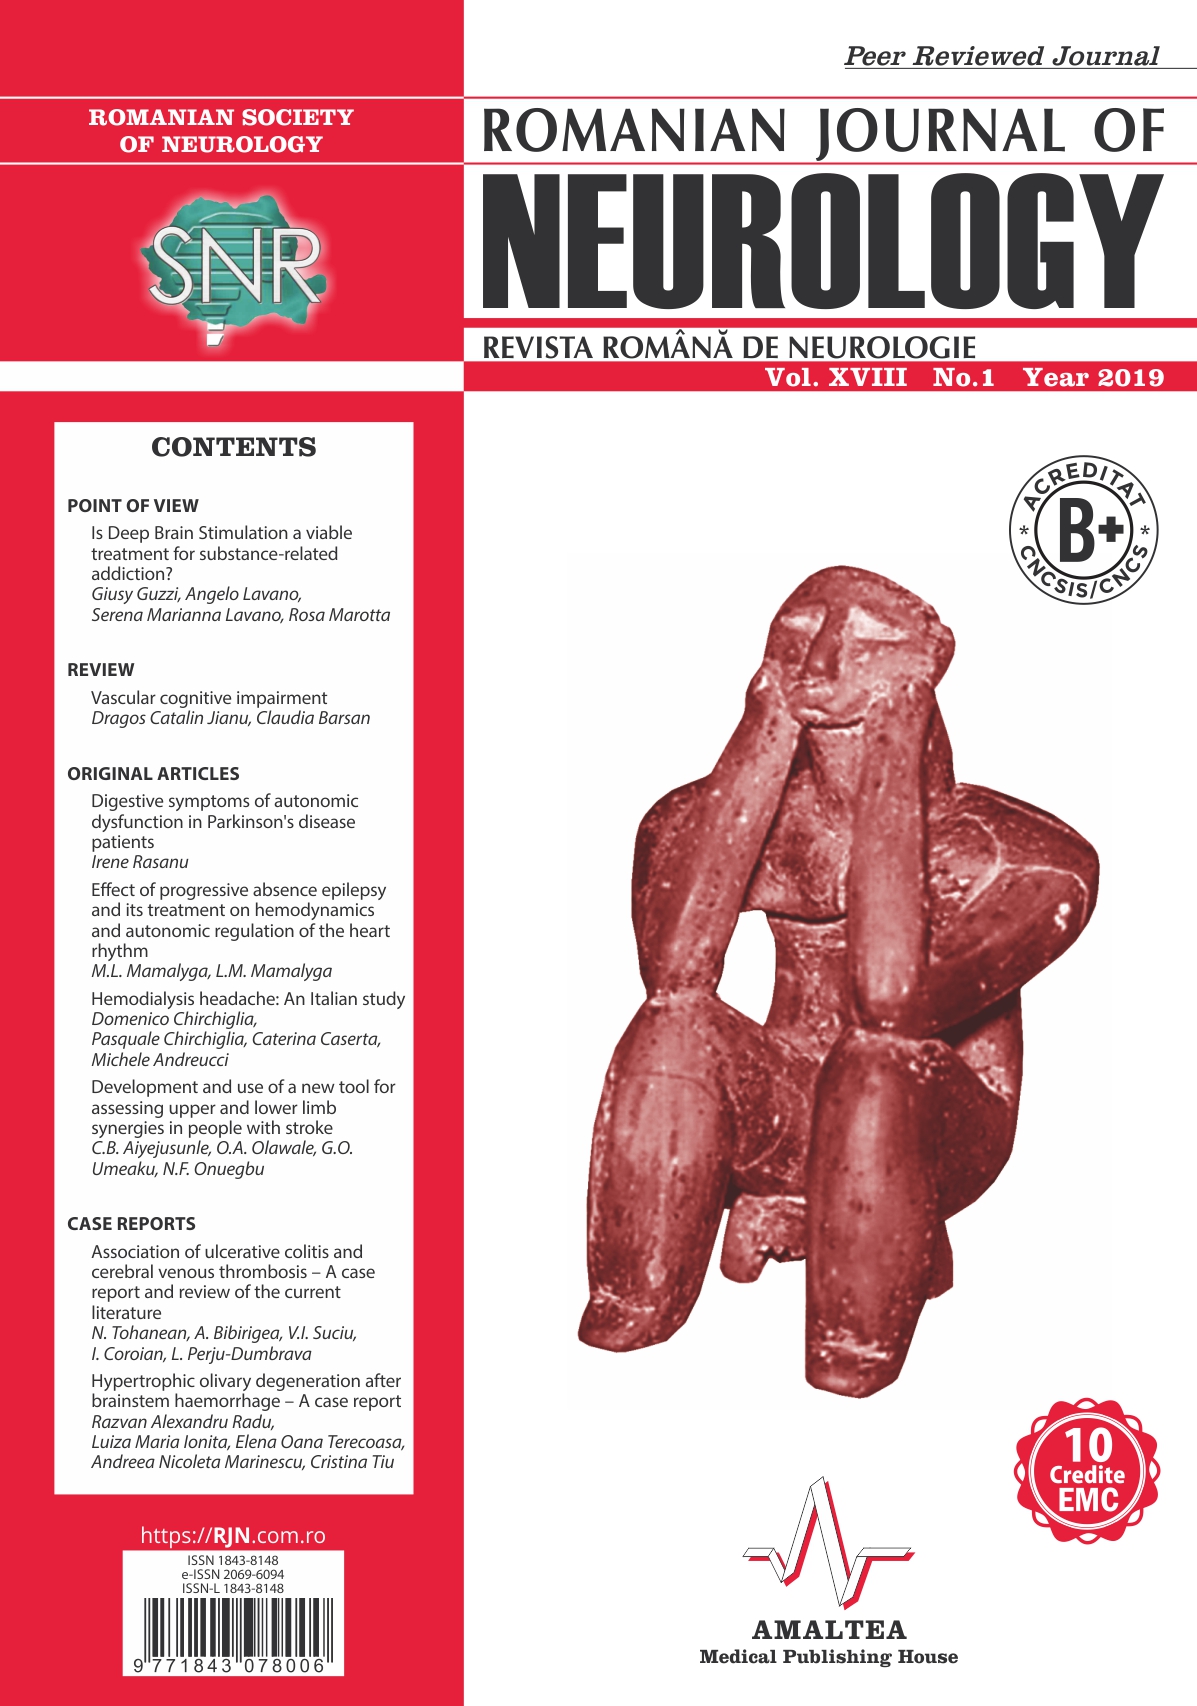 Romanian Journal of Neurology, Volume XVIII, No. 1, 2019